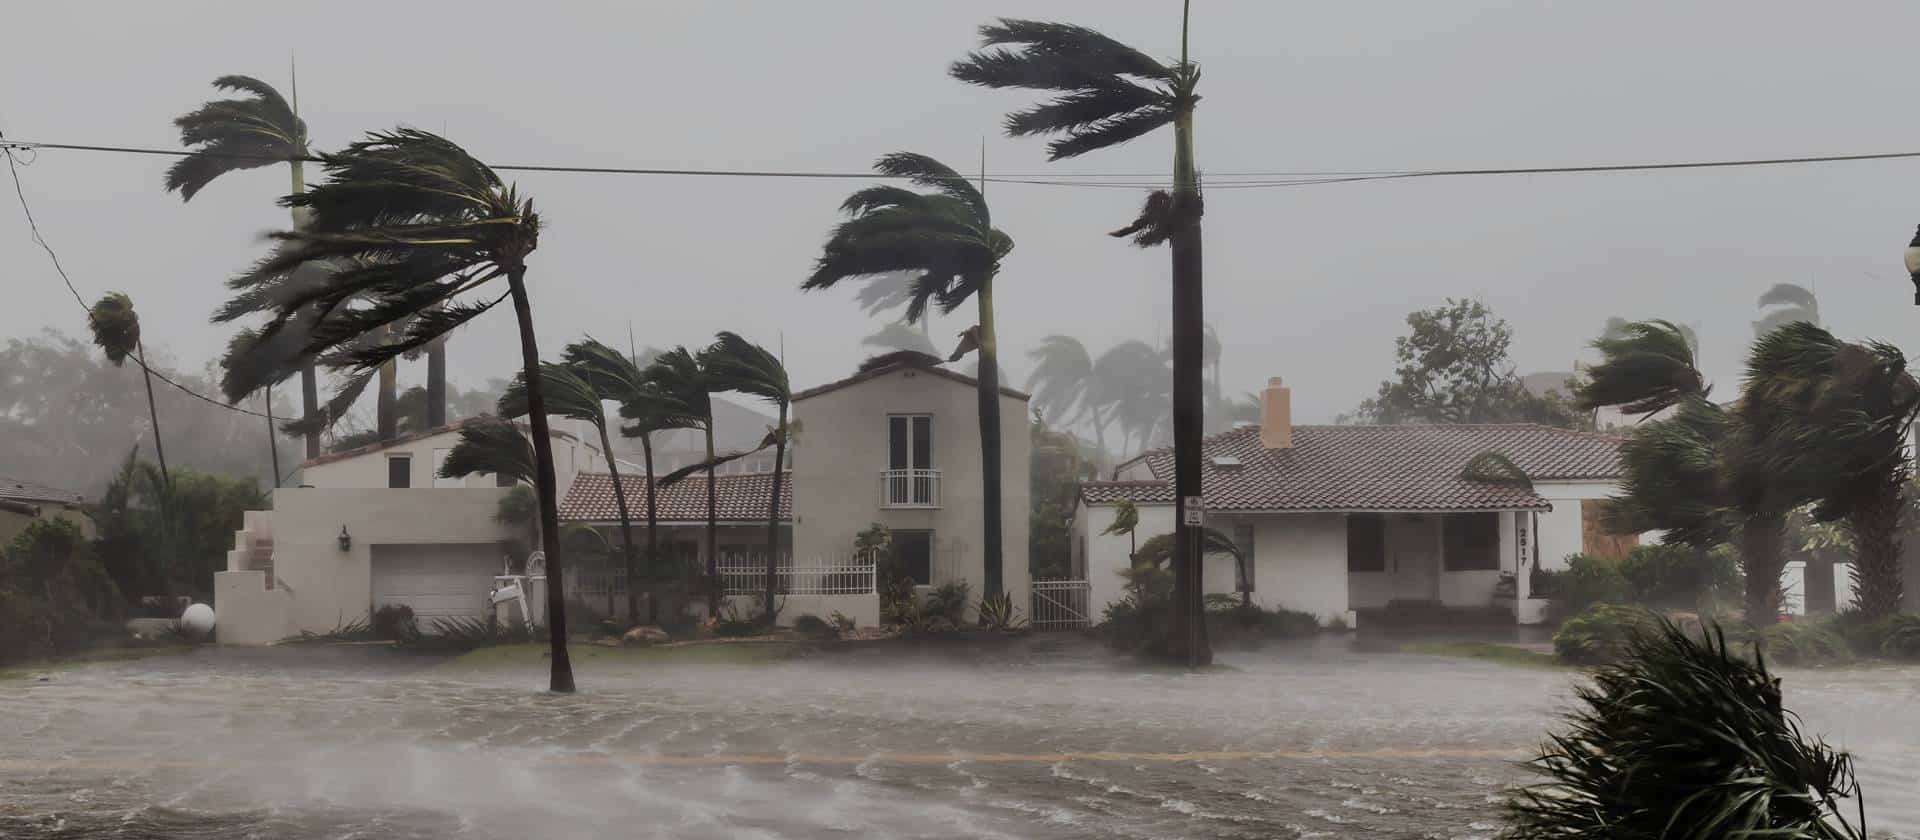 Ajustador Publico, Hurricane Damage